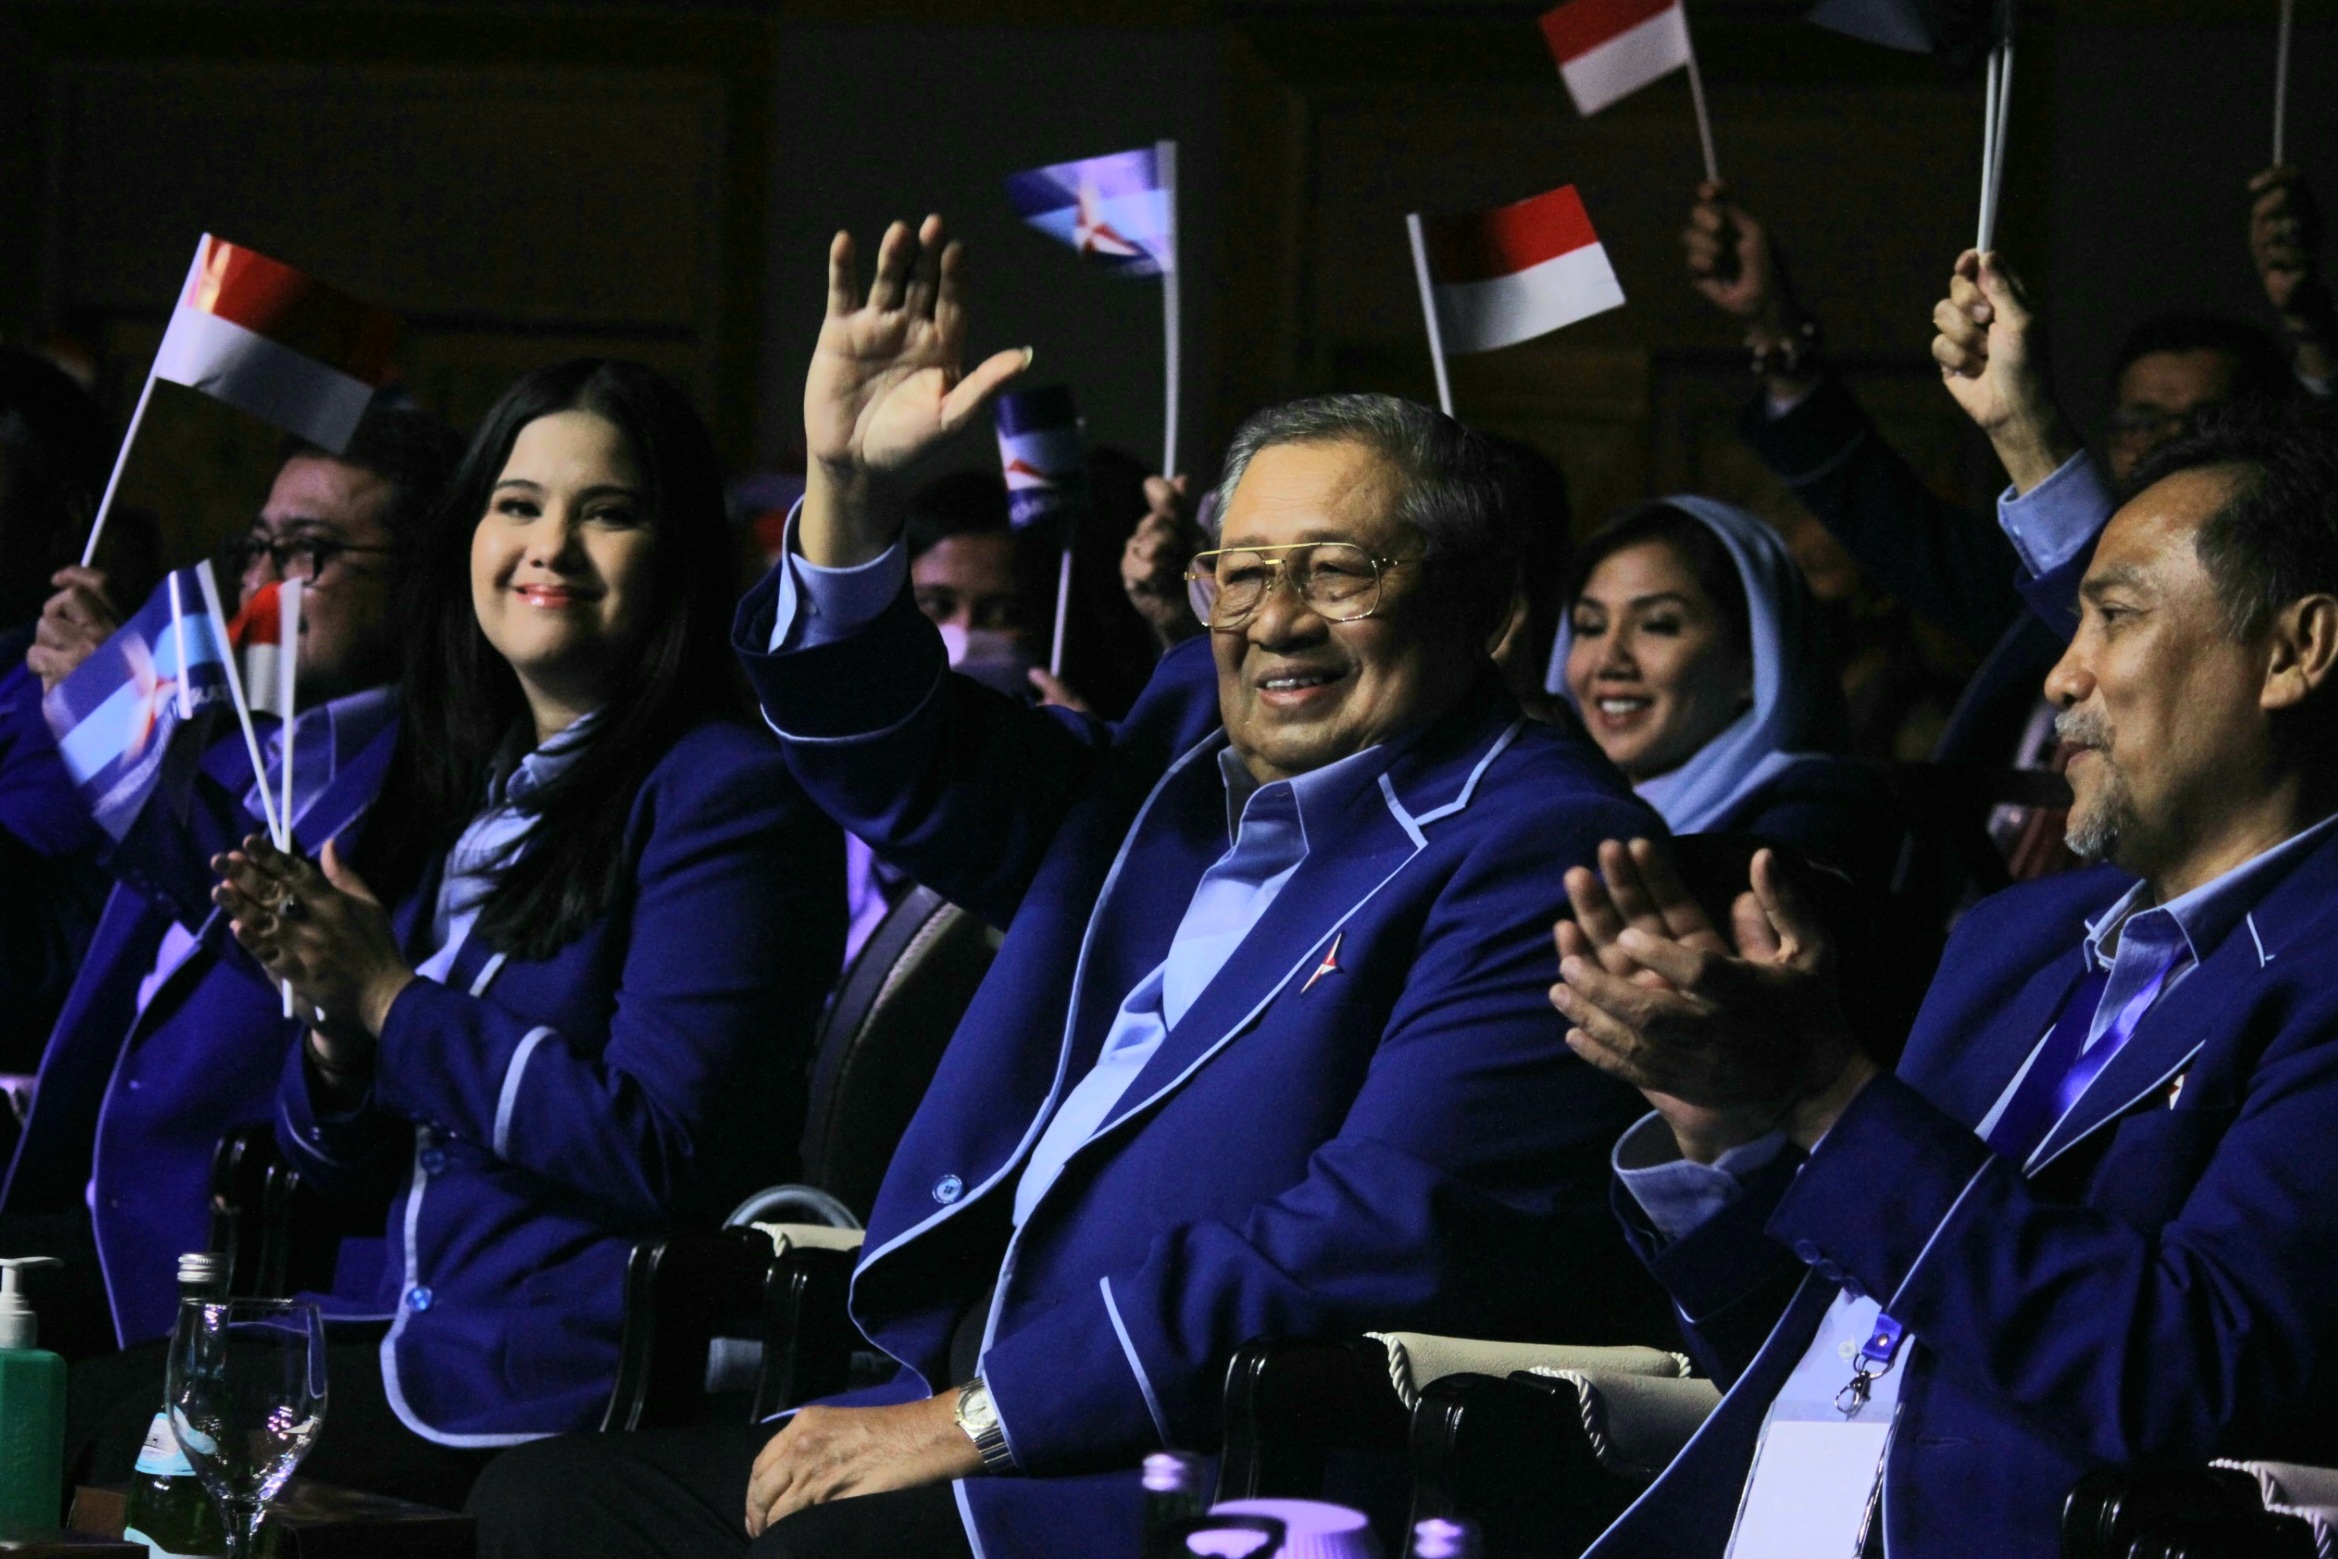 Ketua Umum Partai Demokrat Agus Harimurti Yudhoyono saat memberikan pidato kebangsaan (Ashar/SinPo.id)